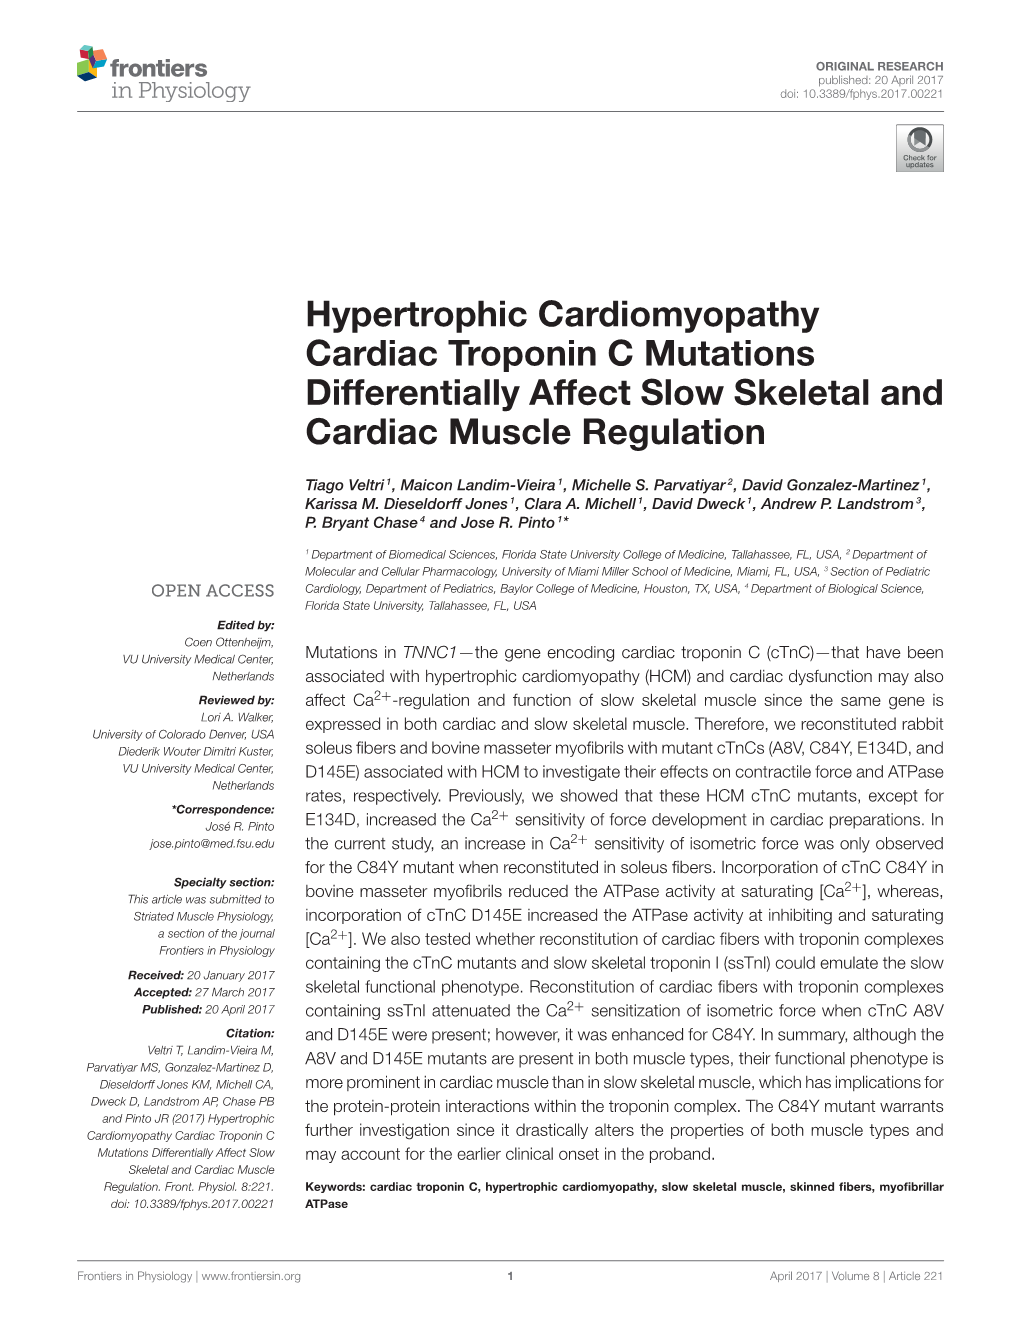 Hypertrophic Cardiomyopathy Cardiac Troponin C Mutations Differentially Affect Slow Skeletal and Cardiac Muscle Regulation